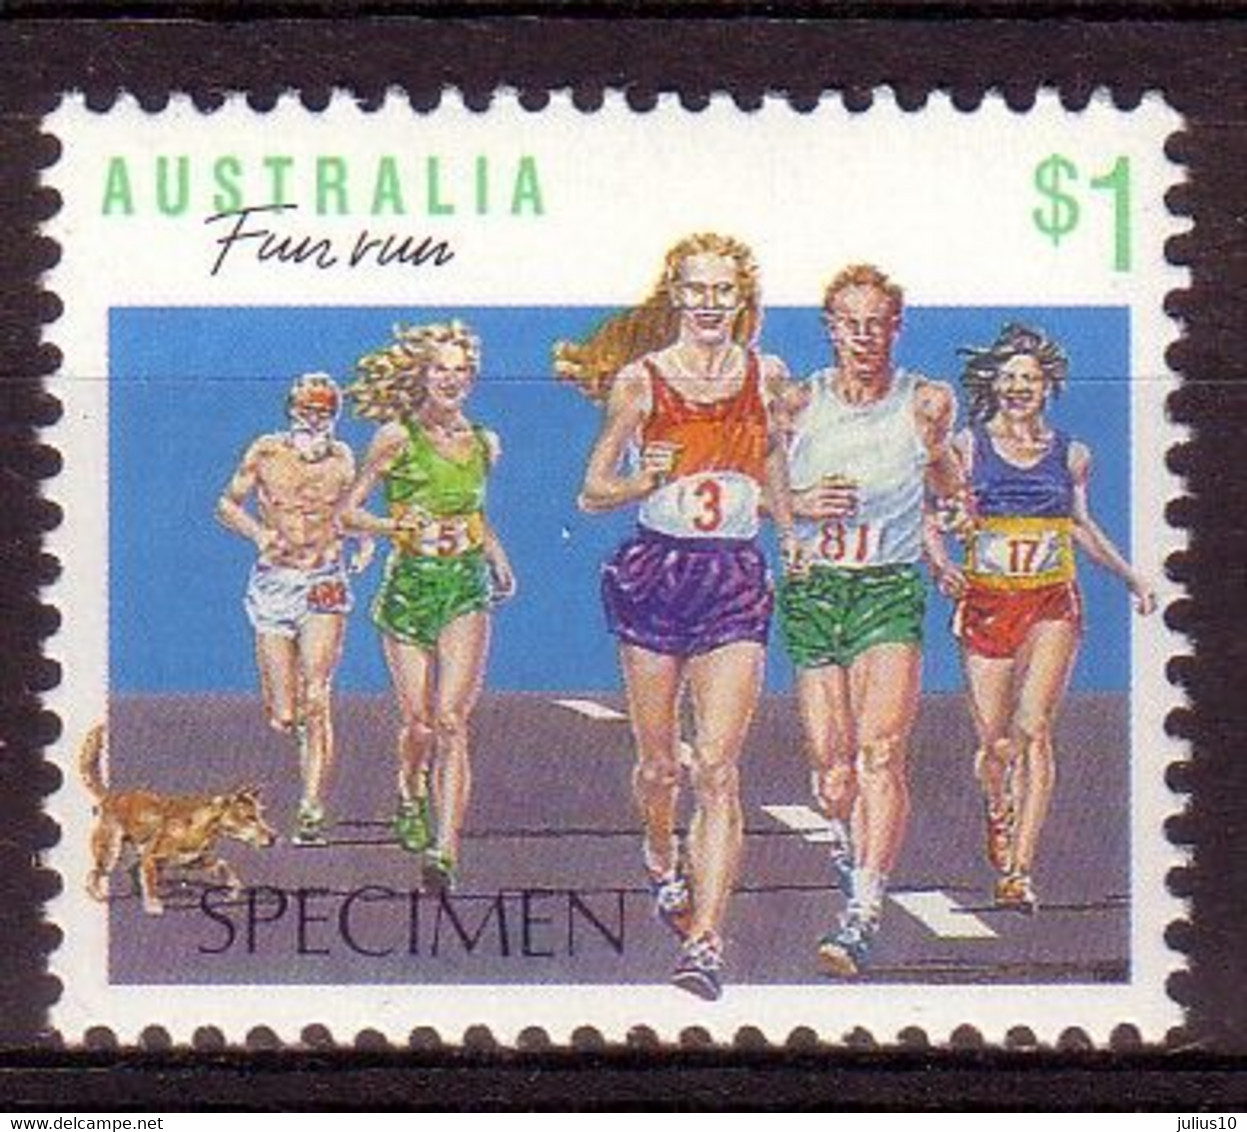 AUSTRALIA 1990 Sport Run „SPECIMEN“ High Value MNH Mi 1186 #10002 - Variedades Y Curiosidades